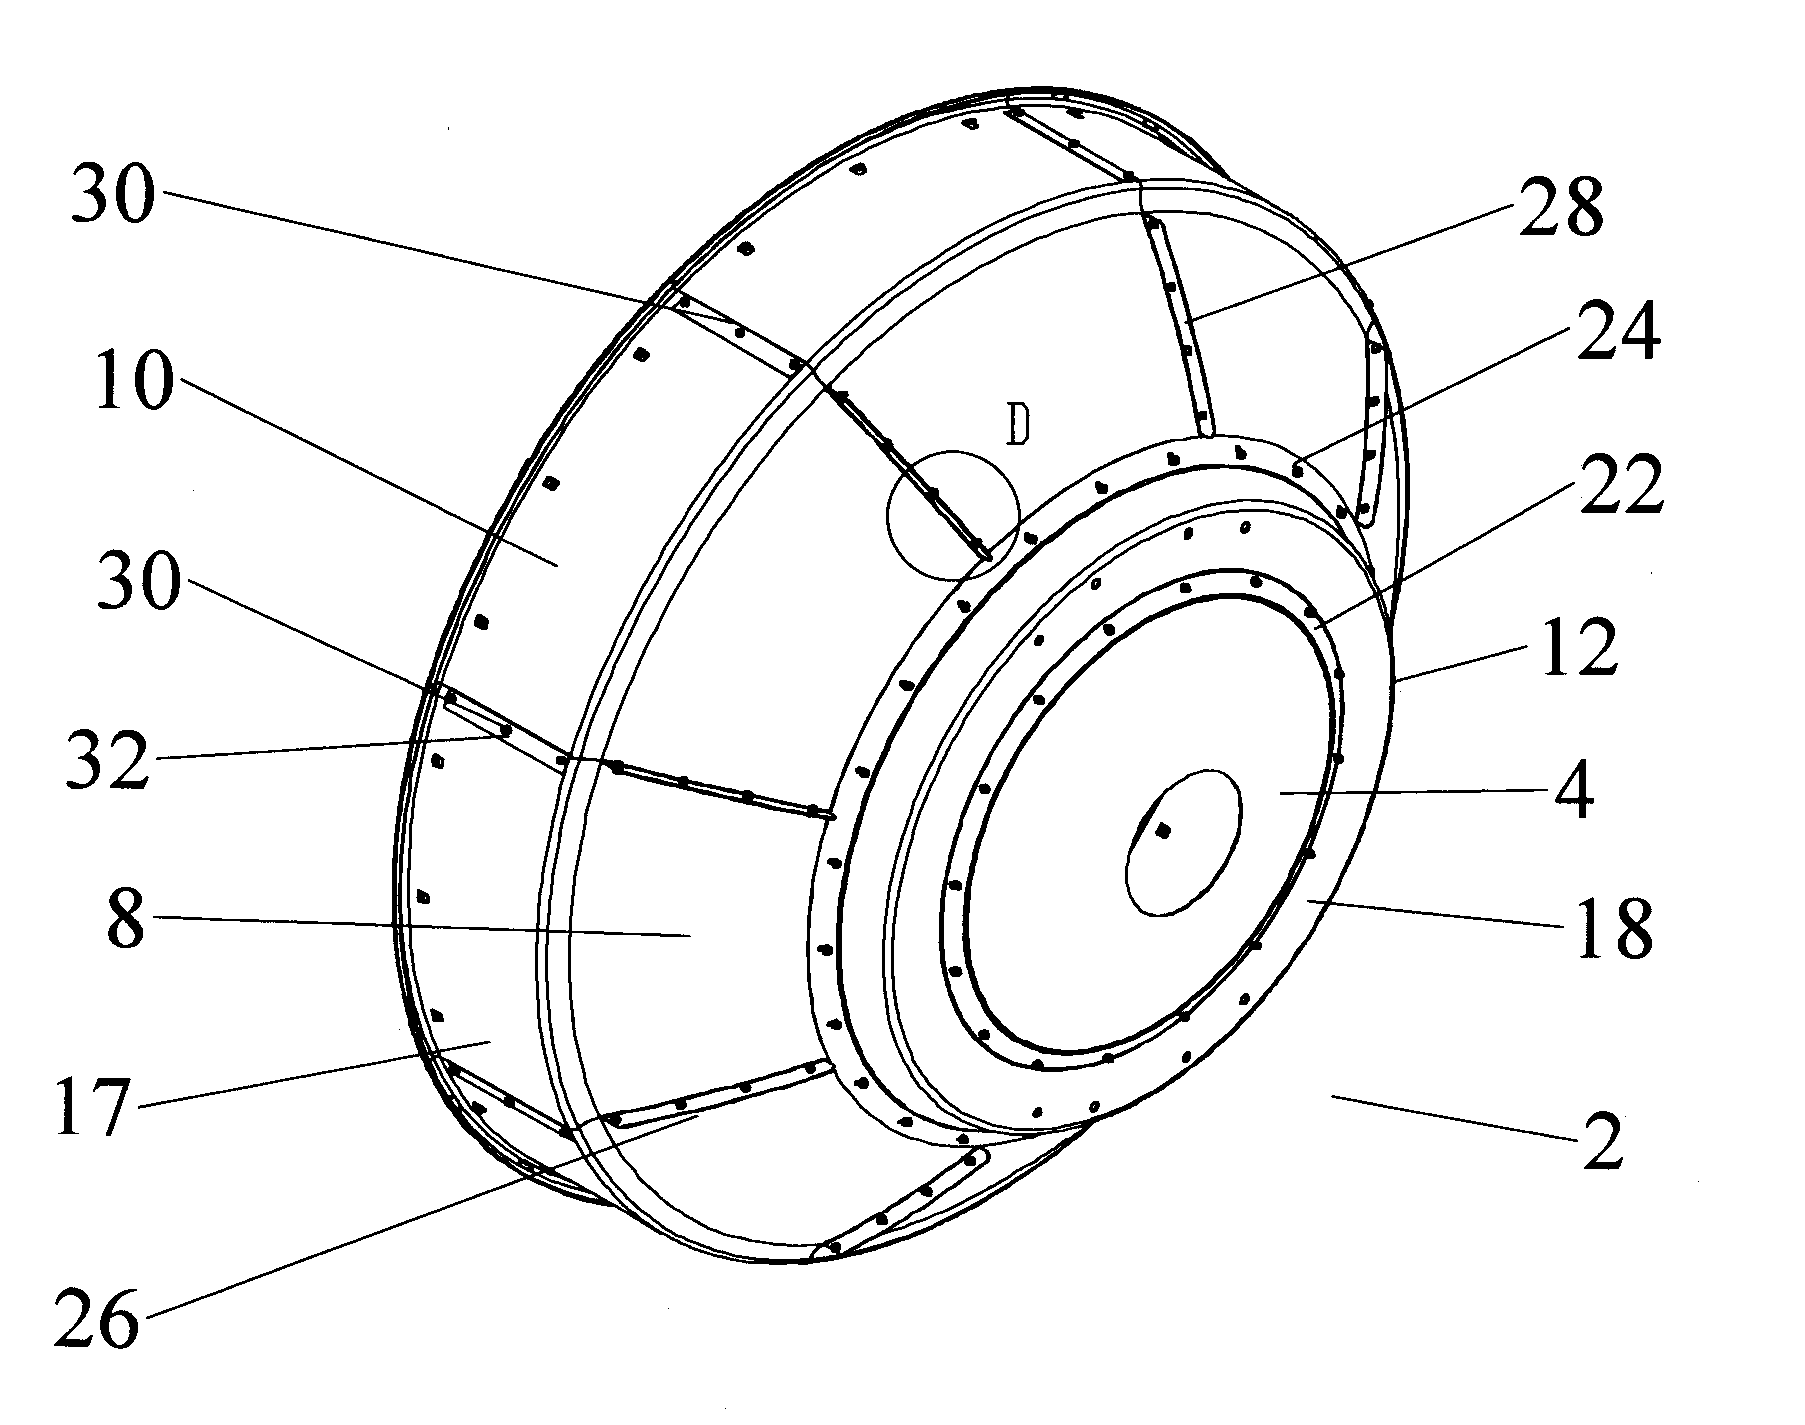 Segmented antenna reflector with shield